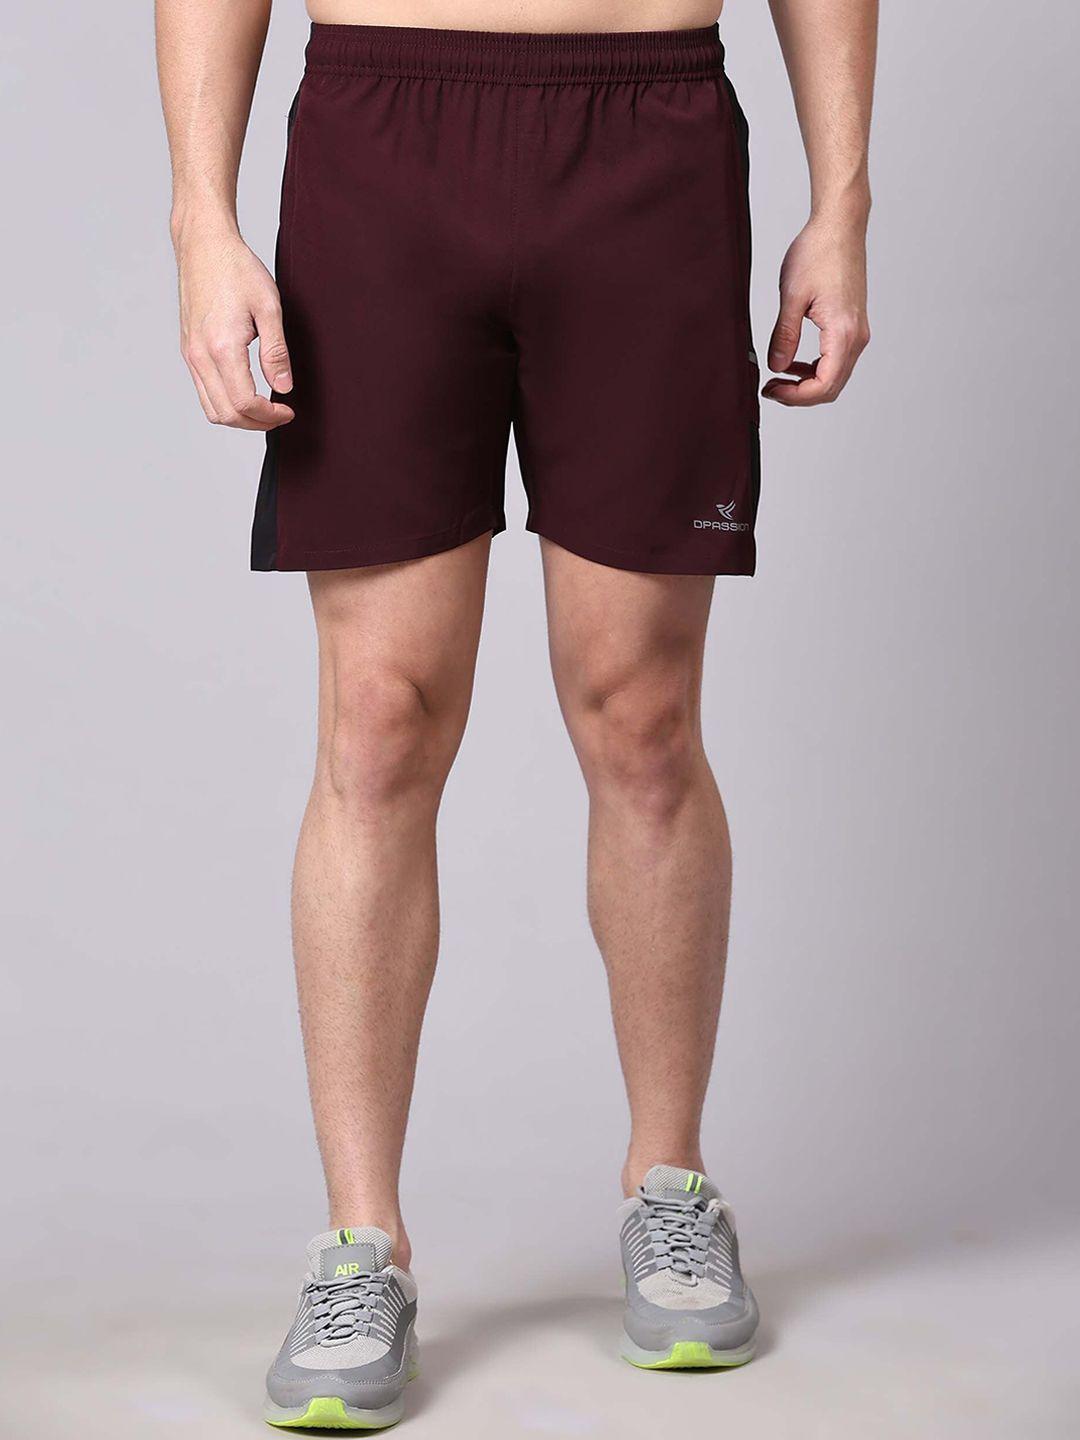 dpassion men rapid-dry running sports shorts